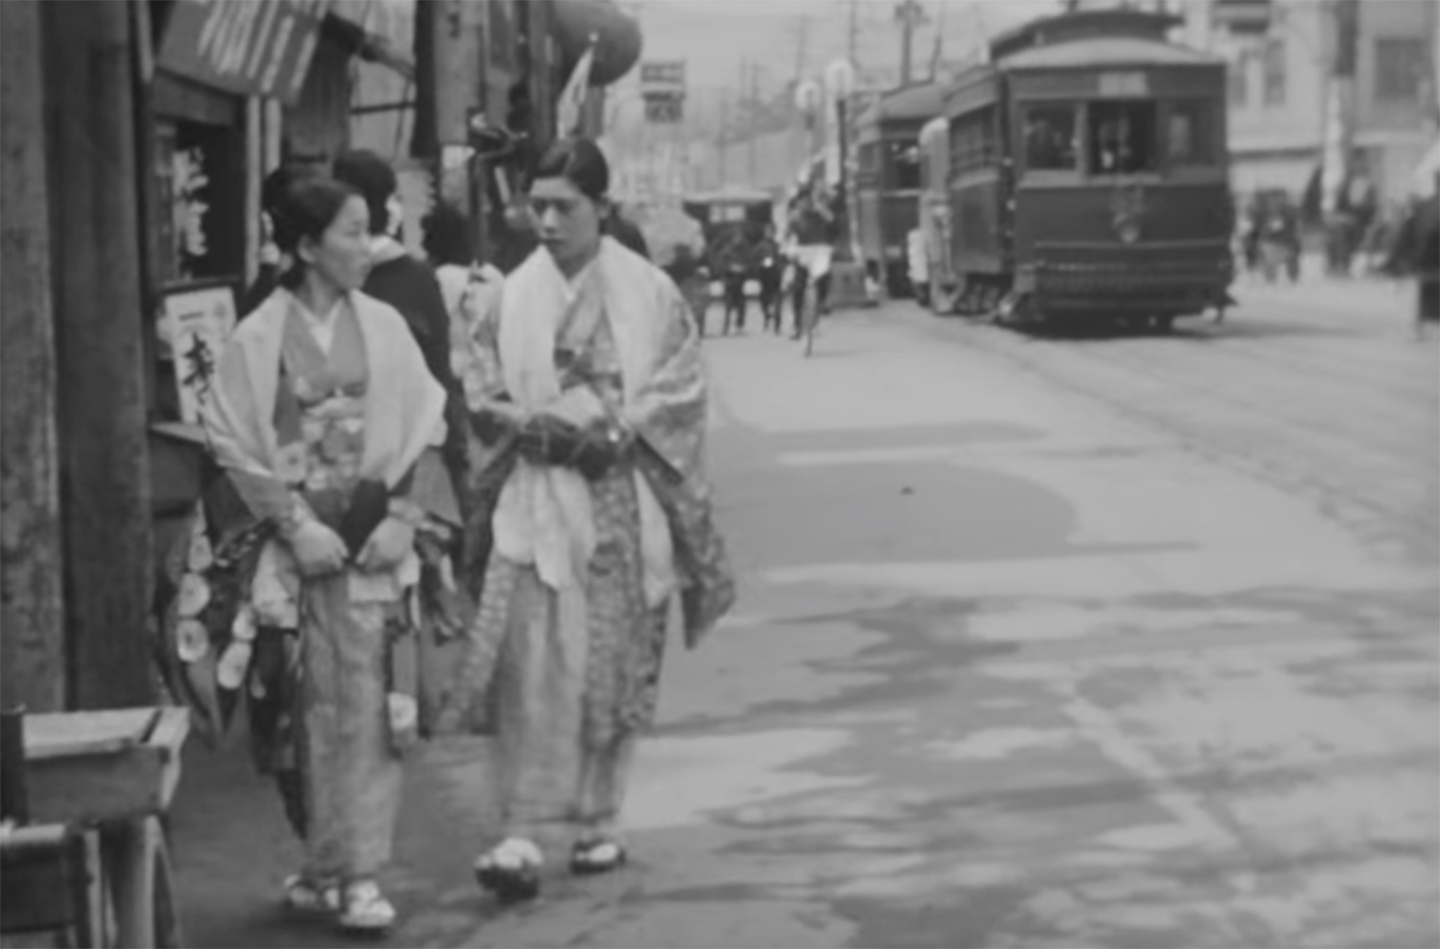 On film sex in Hiroshima